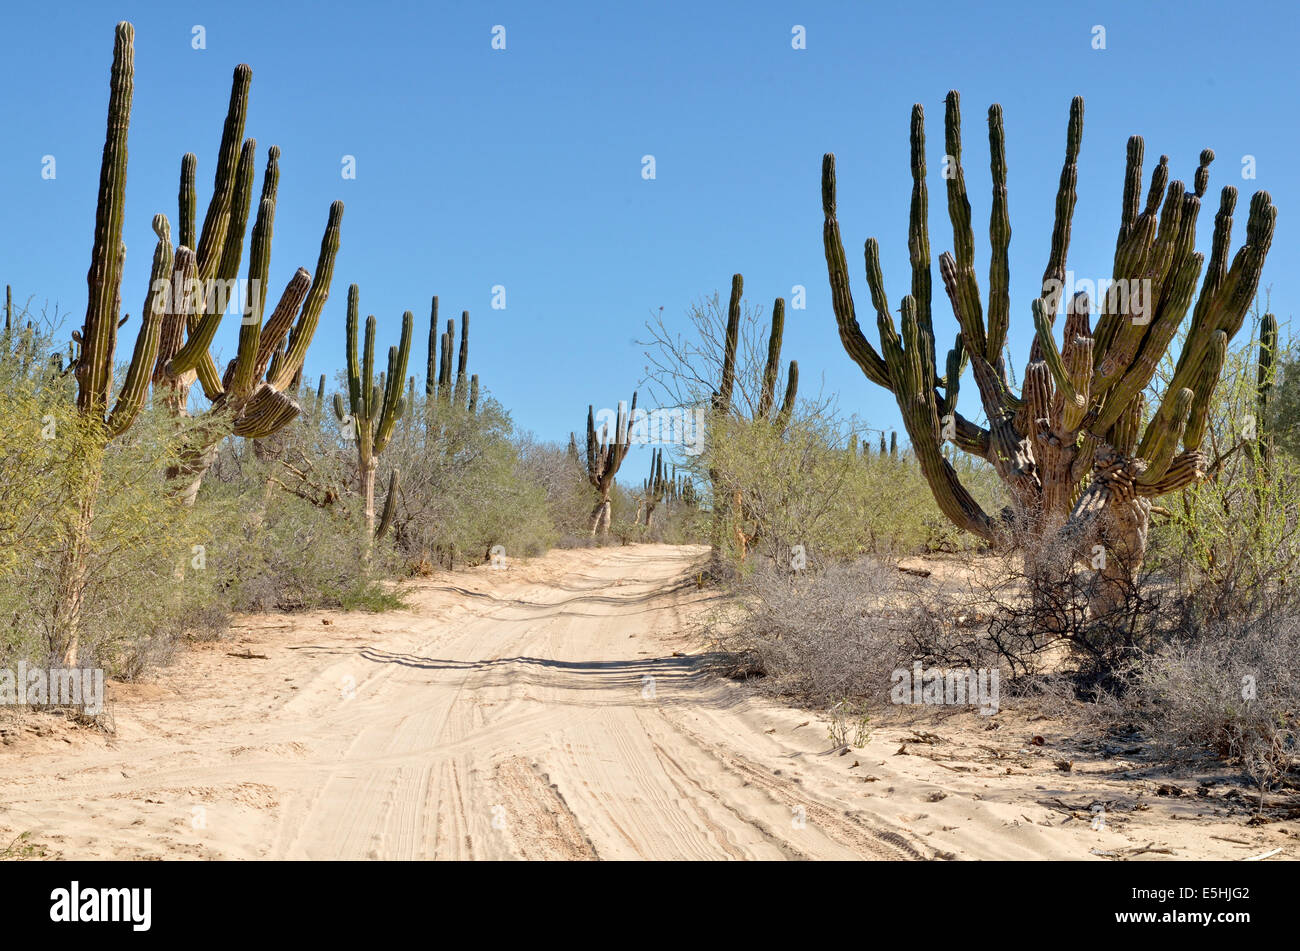 Strada di sabbia con Cardon cactus (Pachycereus Pringlei) cactus deserto presso la Ventana, Baja California Sur, Messico Foto Stock